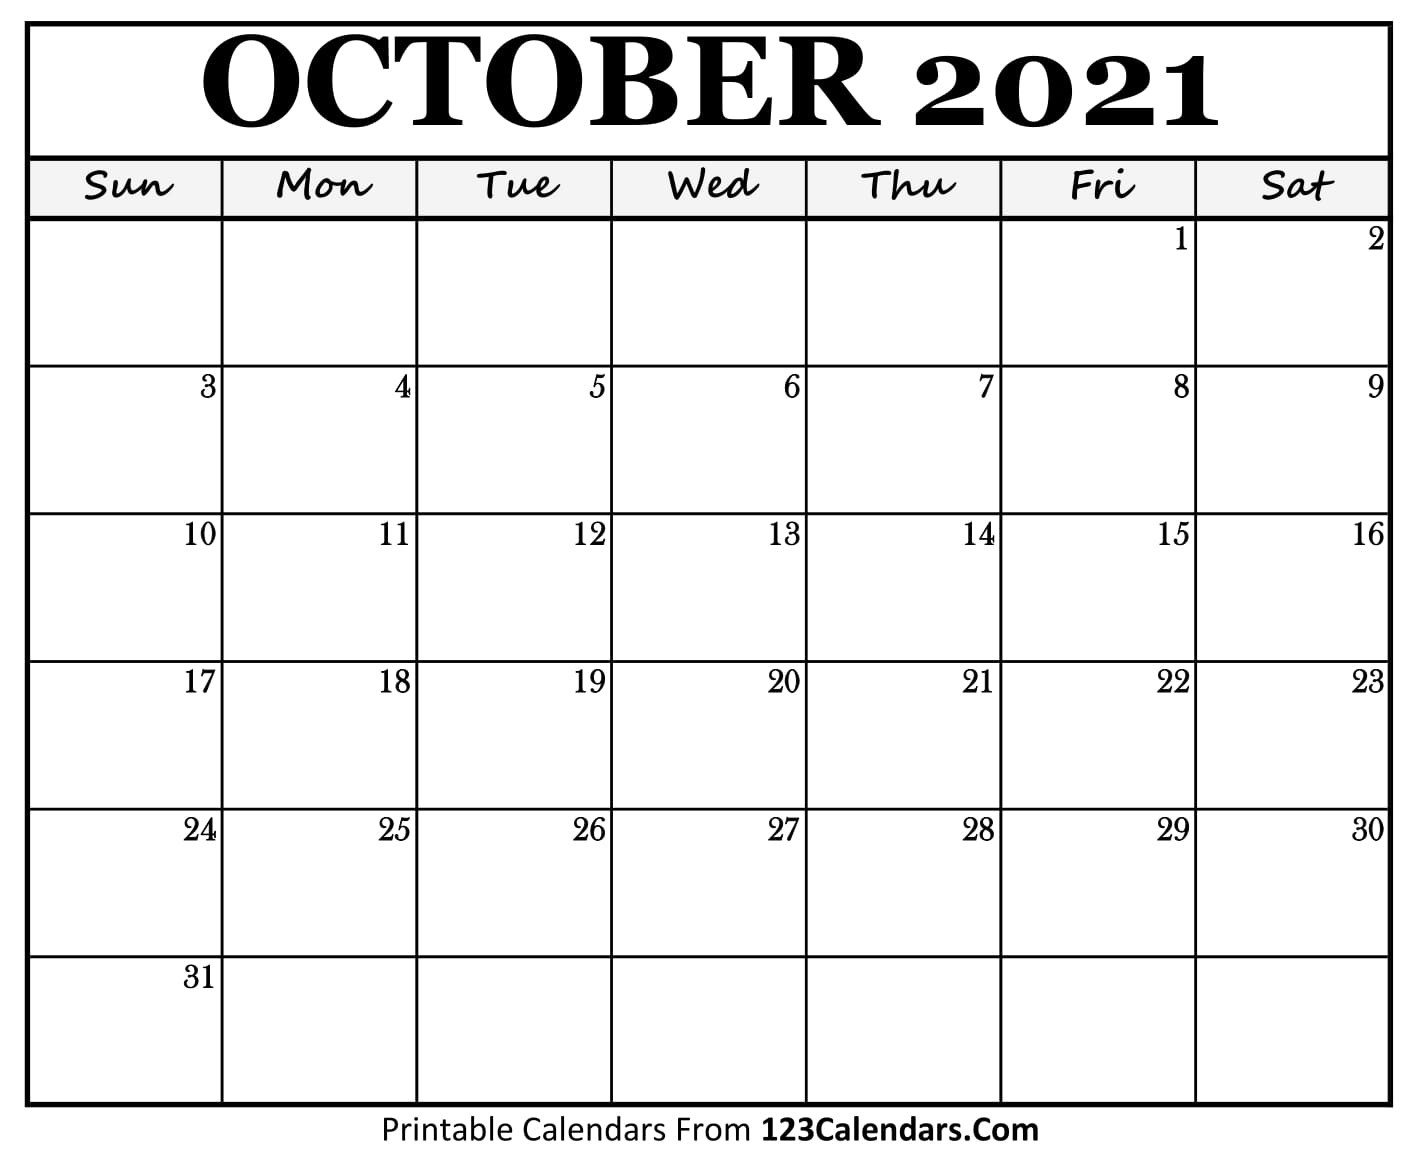 Printable October 2021 Calendar Templates | 123Calendars